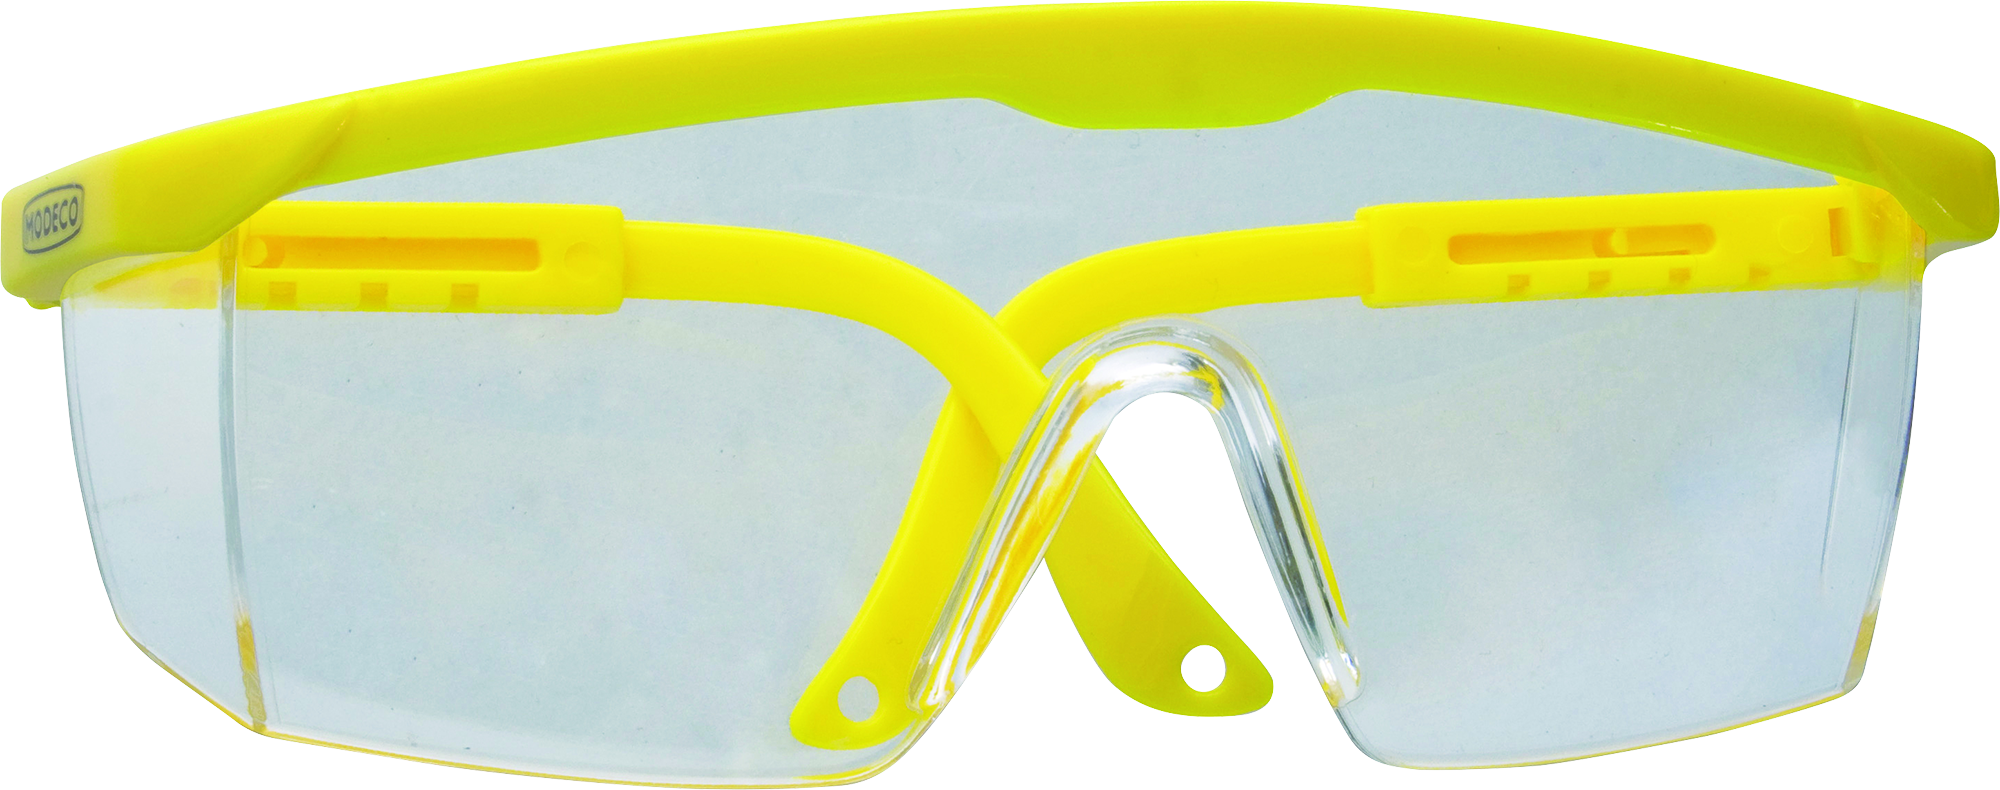 MN-06-099 Safety glasses